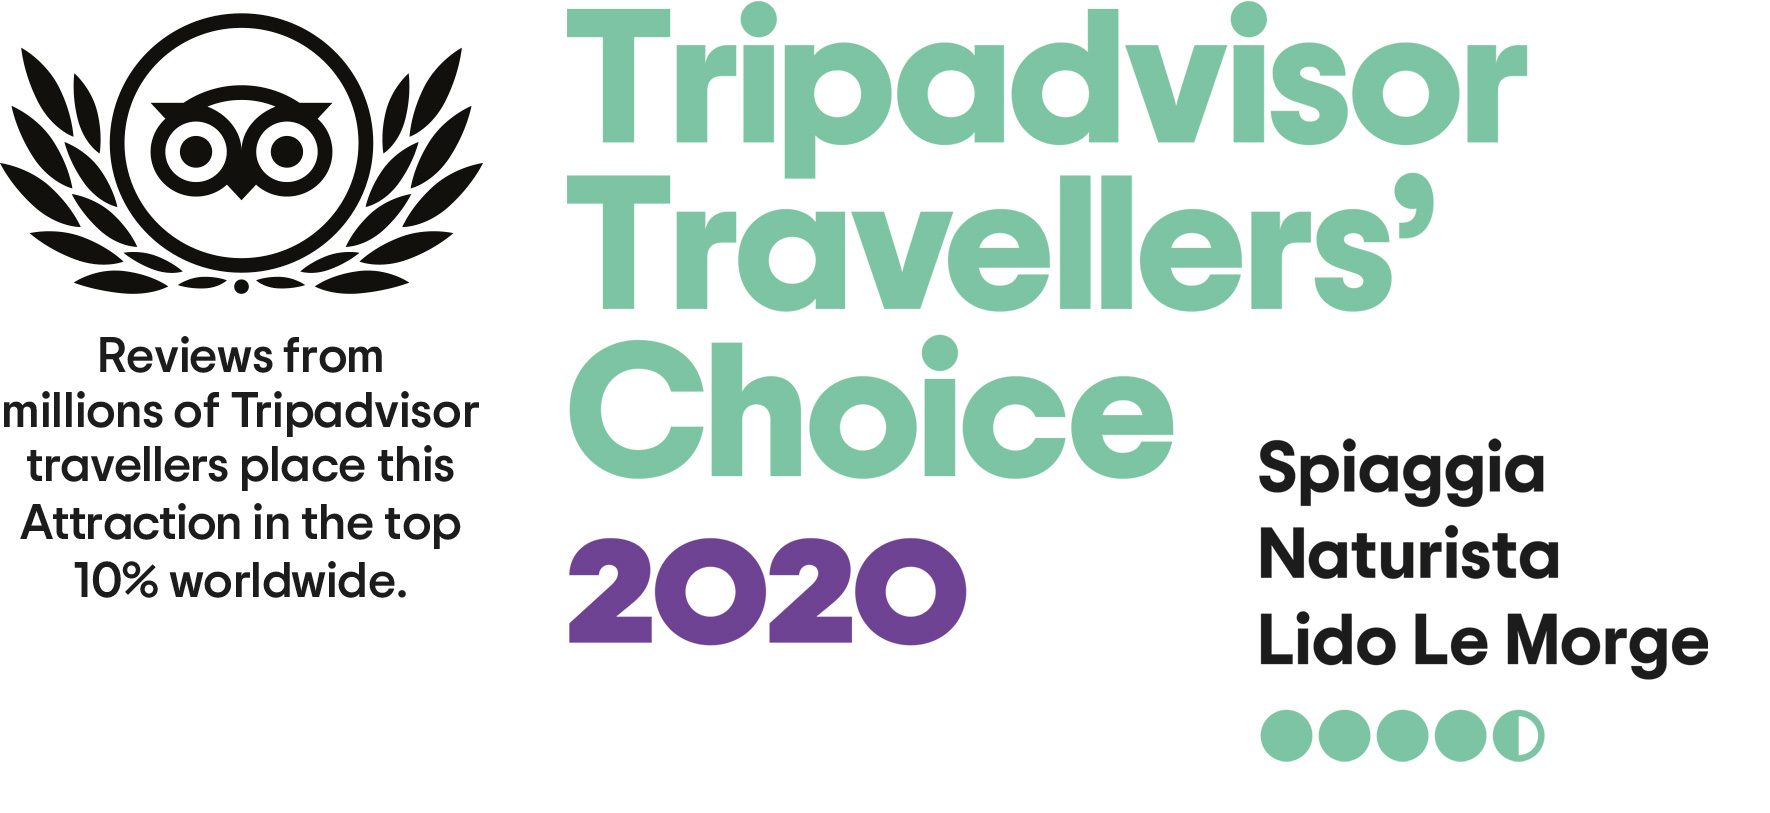 Tripadvisor-travelers'-choiche-2020